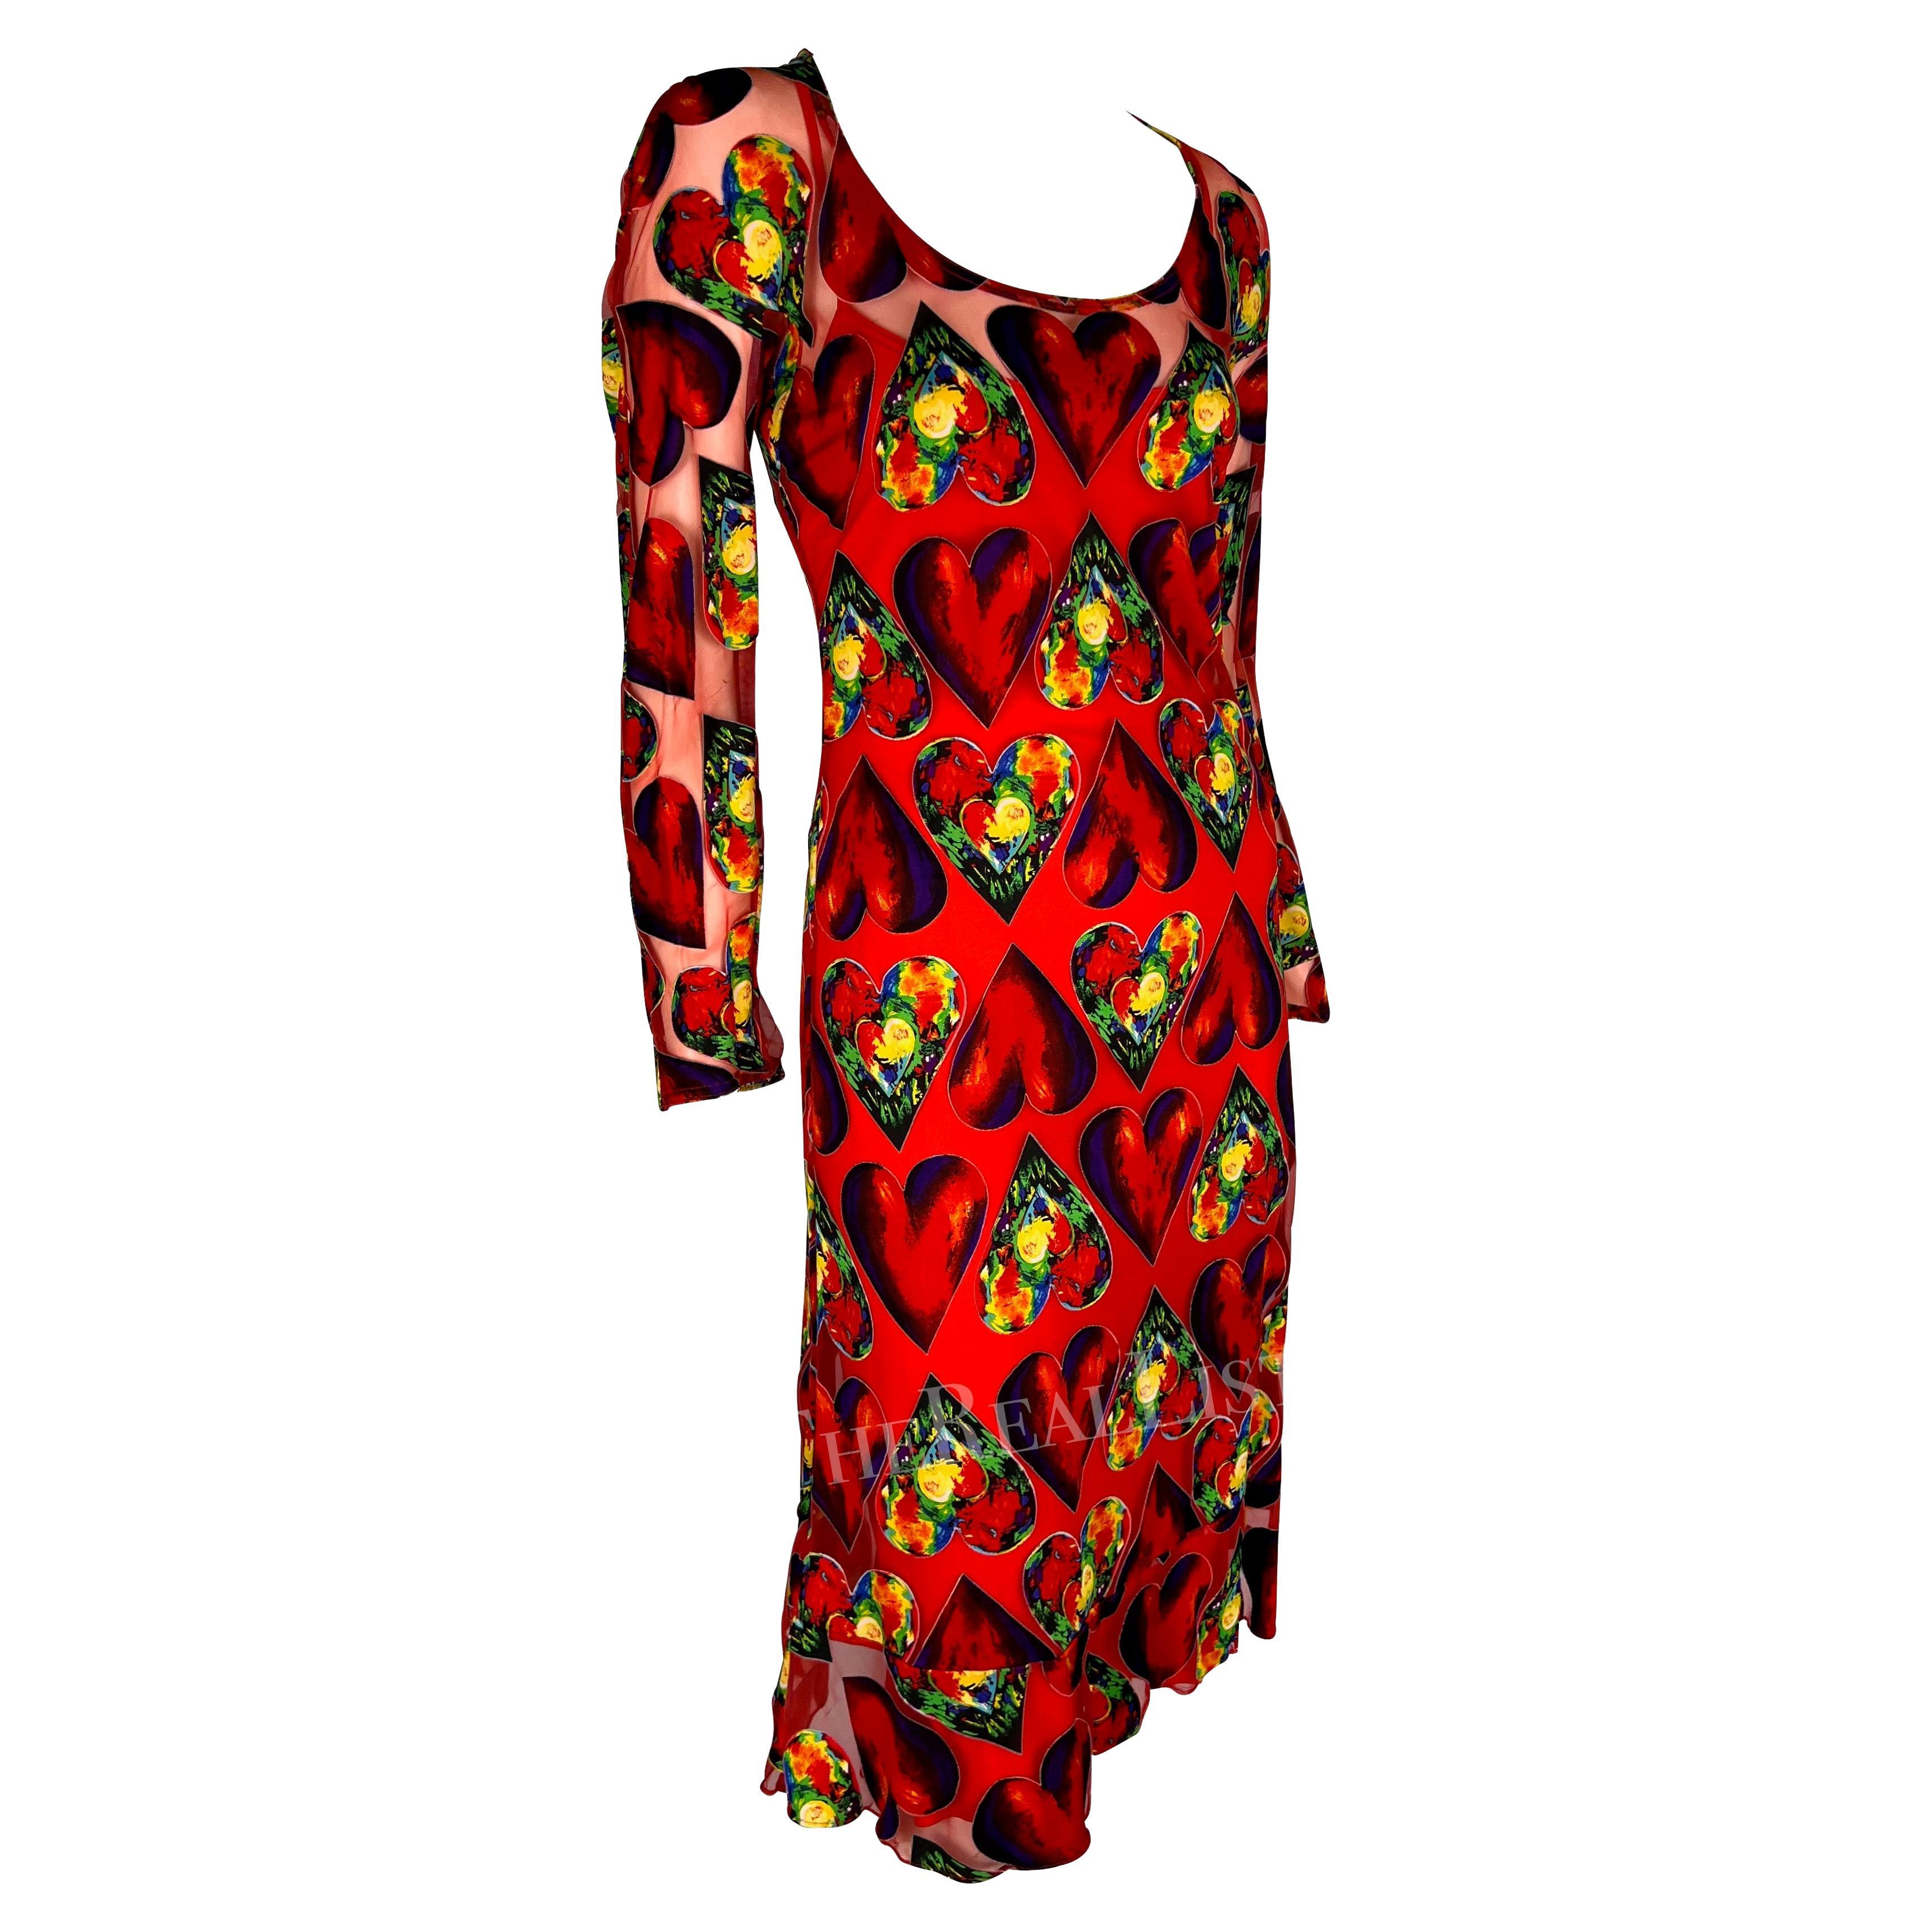 S/S 1997 Gianni Versace Runway Red Sheer Heart Print Bodycon Dress Slip Set For Sale 4